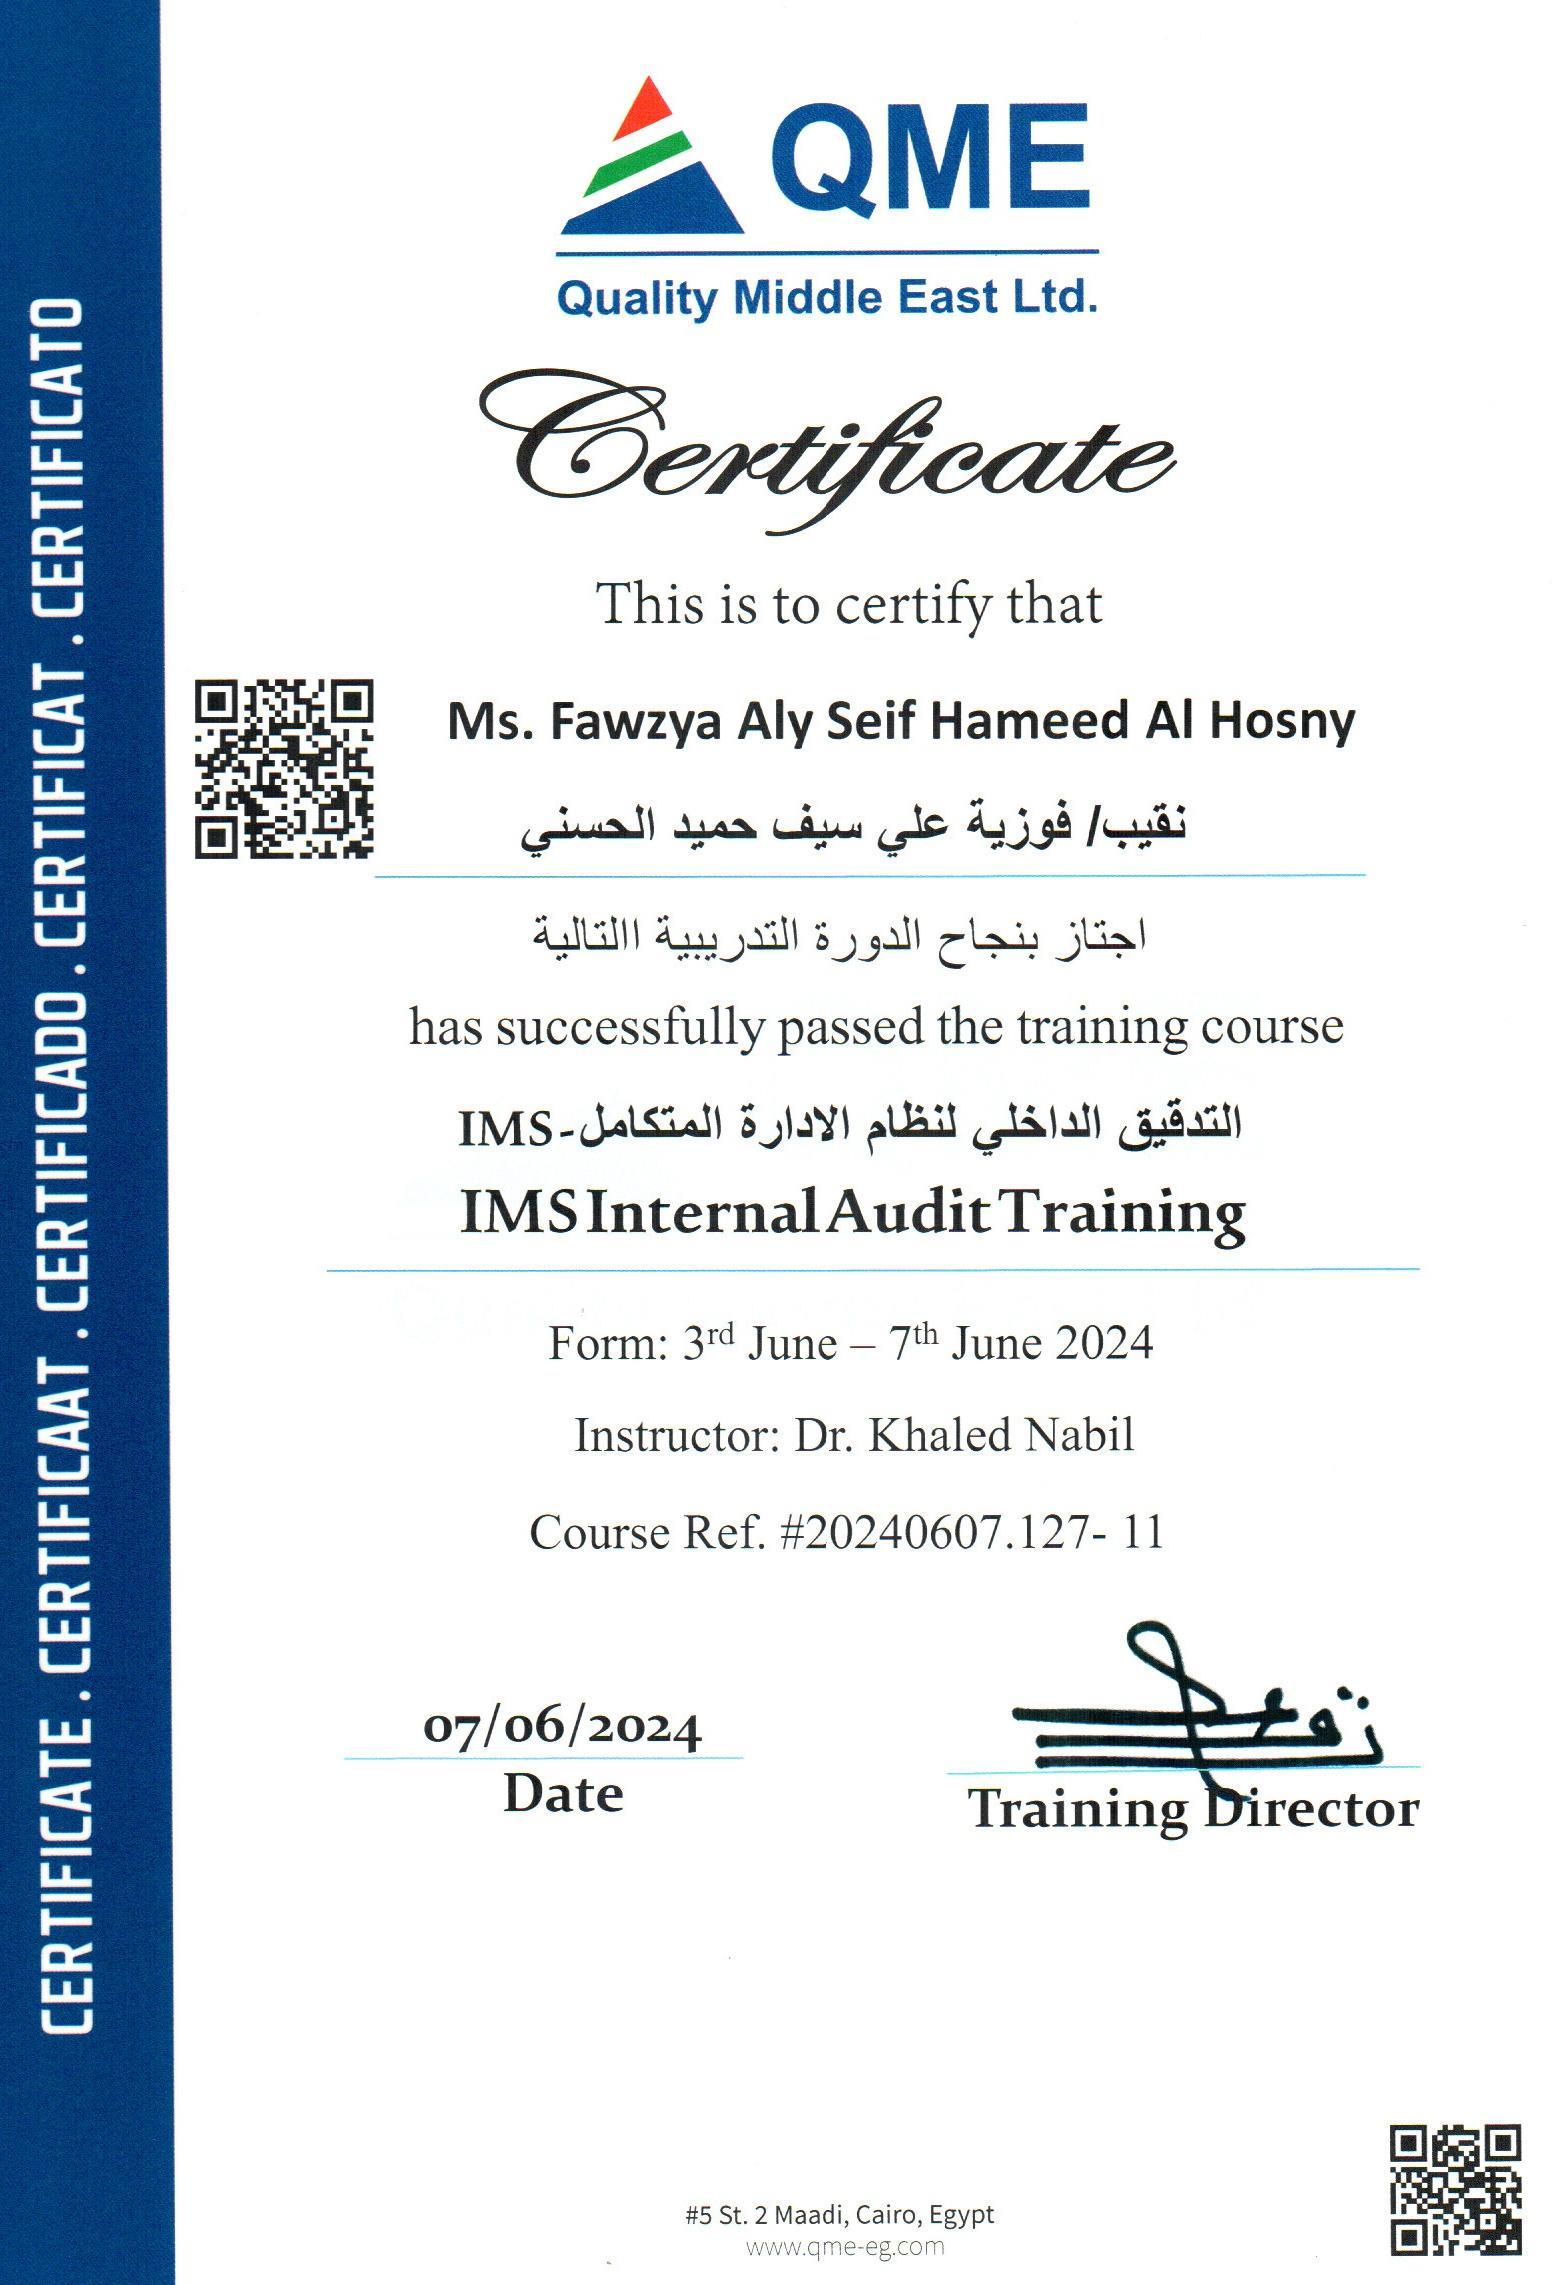 Ms. Fawzya Aly Seif Hameed Al Hosny